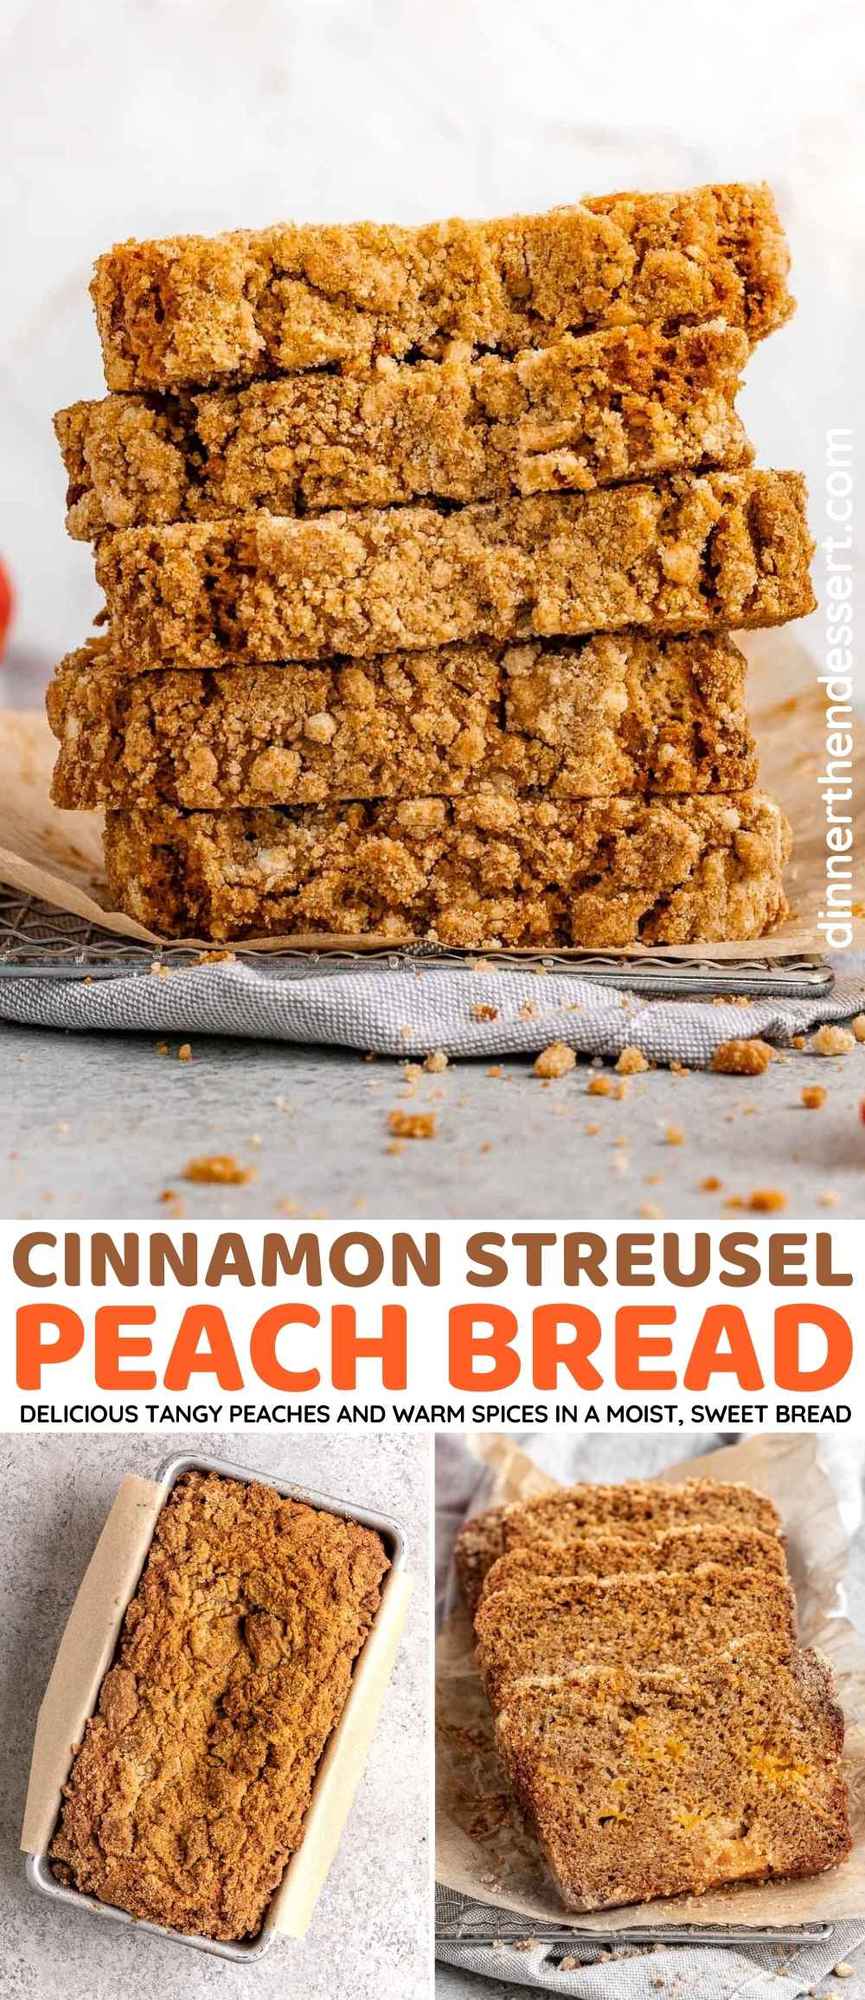 Cinnamon Streusel Peach Bread collage